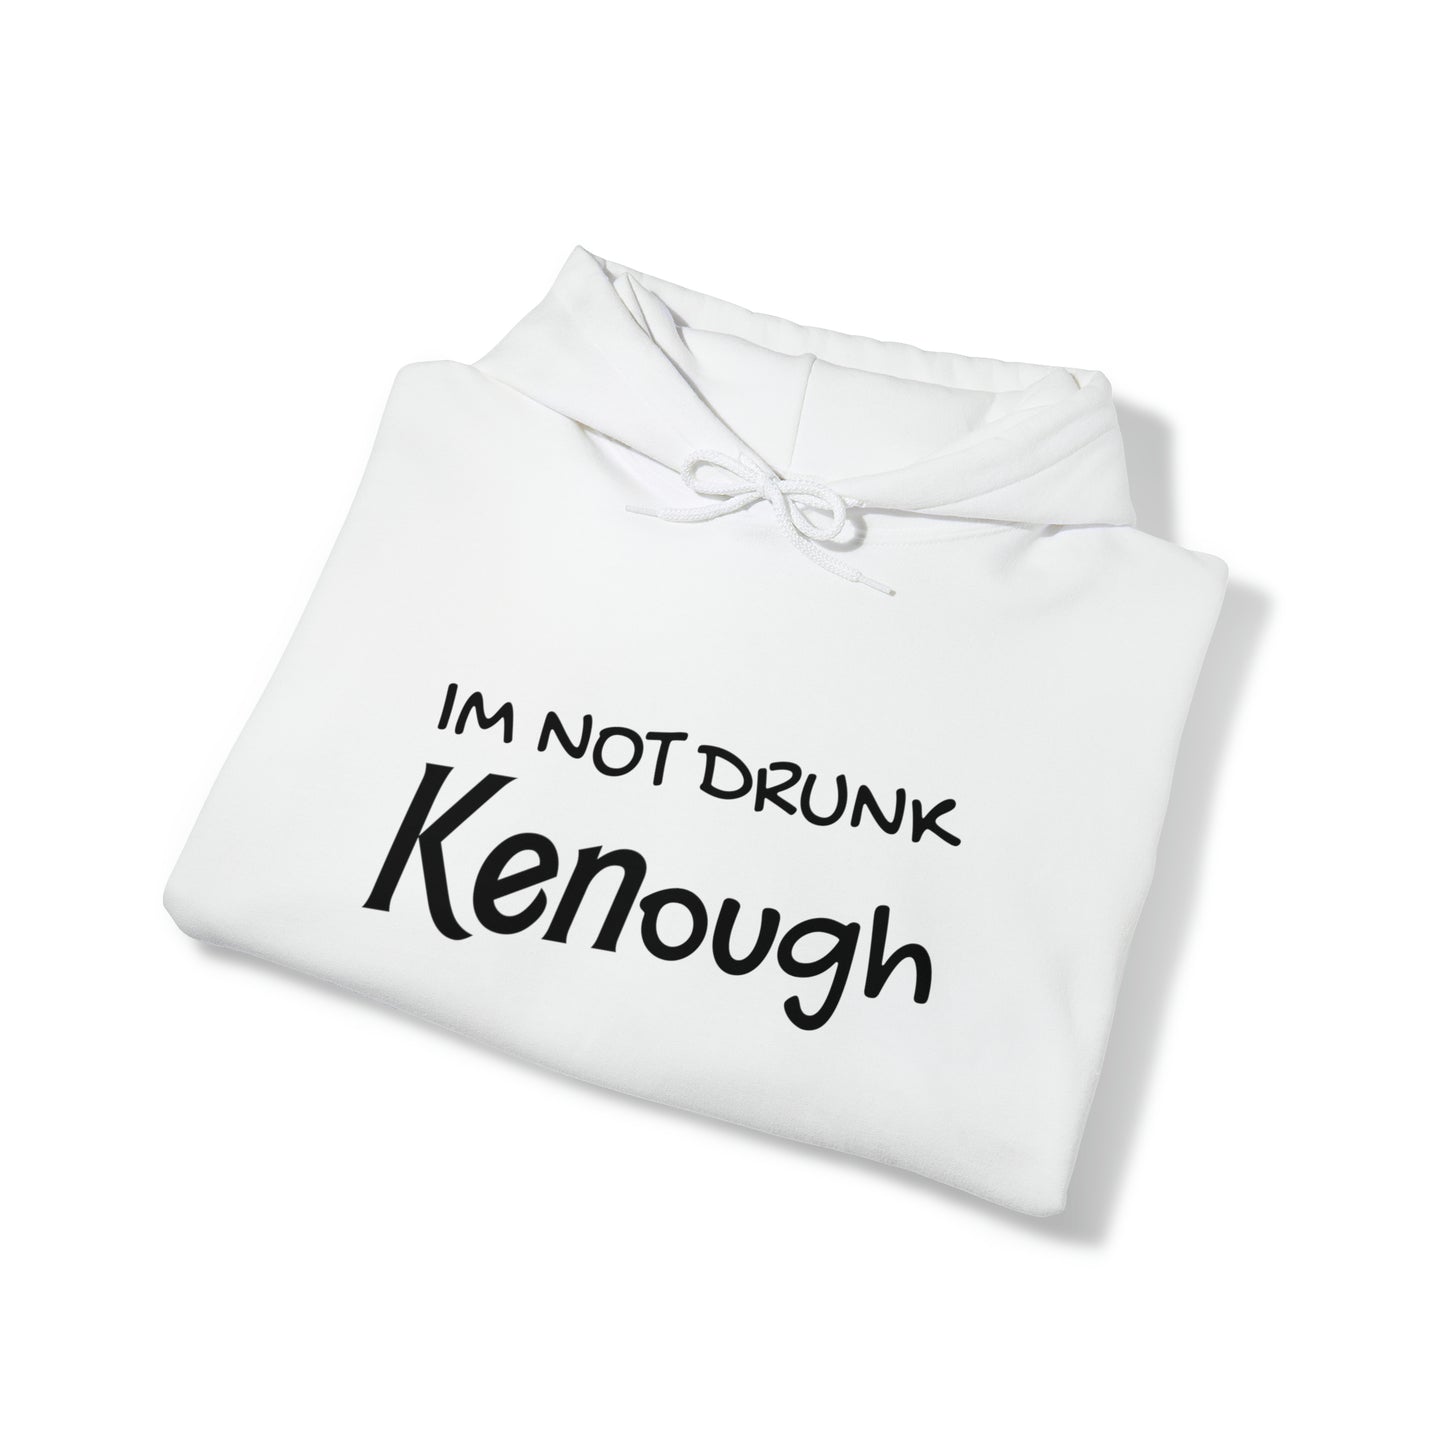 I'm not drunk Kenough Barbie (Black) - Unisex Heavy Blend™ Hooded Sweatshirt